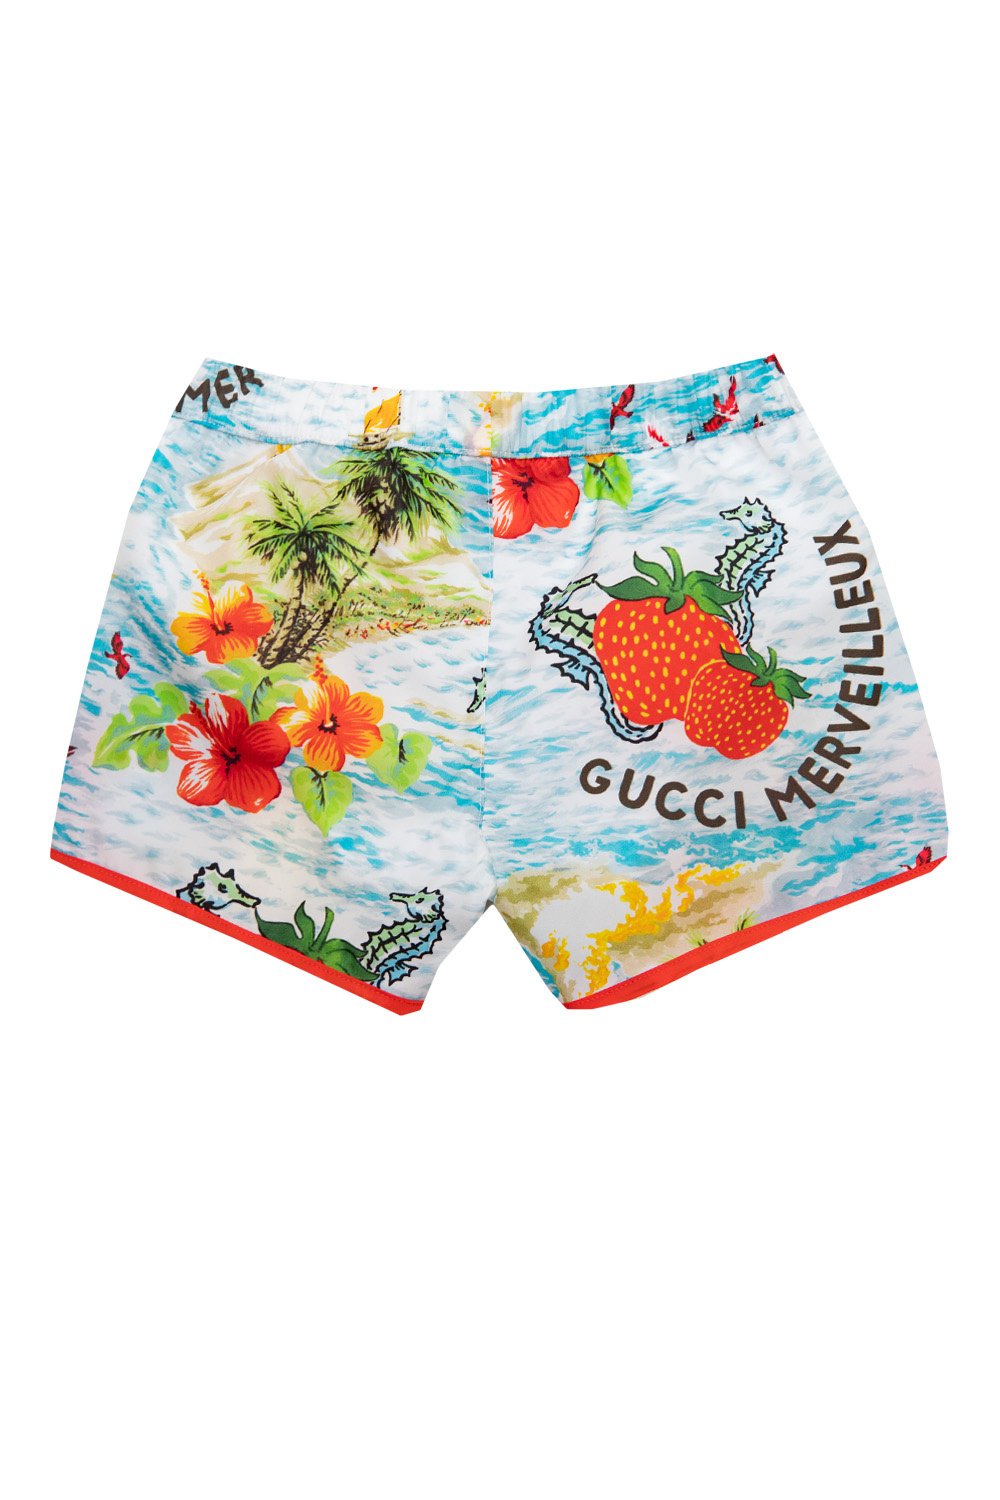 gucci bag Kids Swim shorts